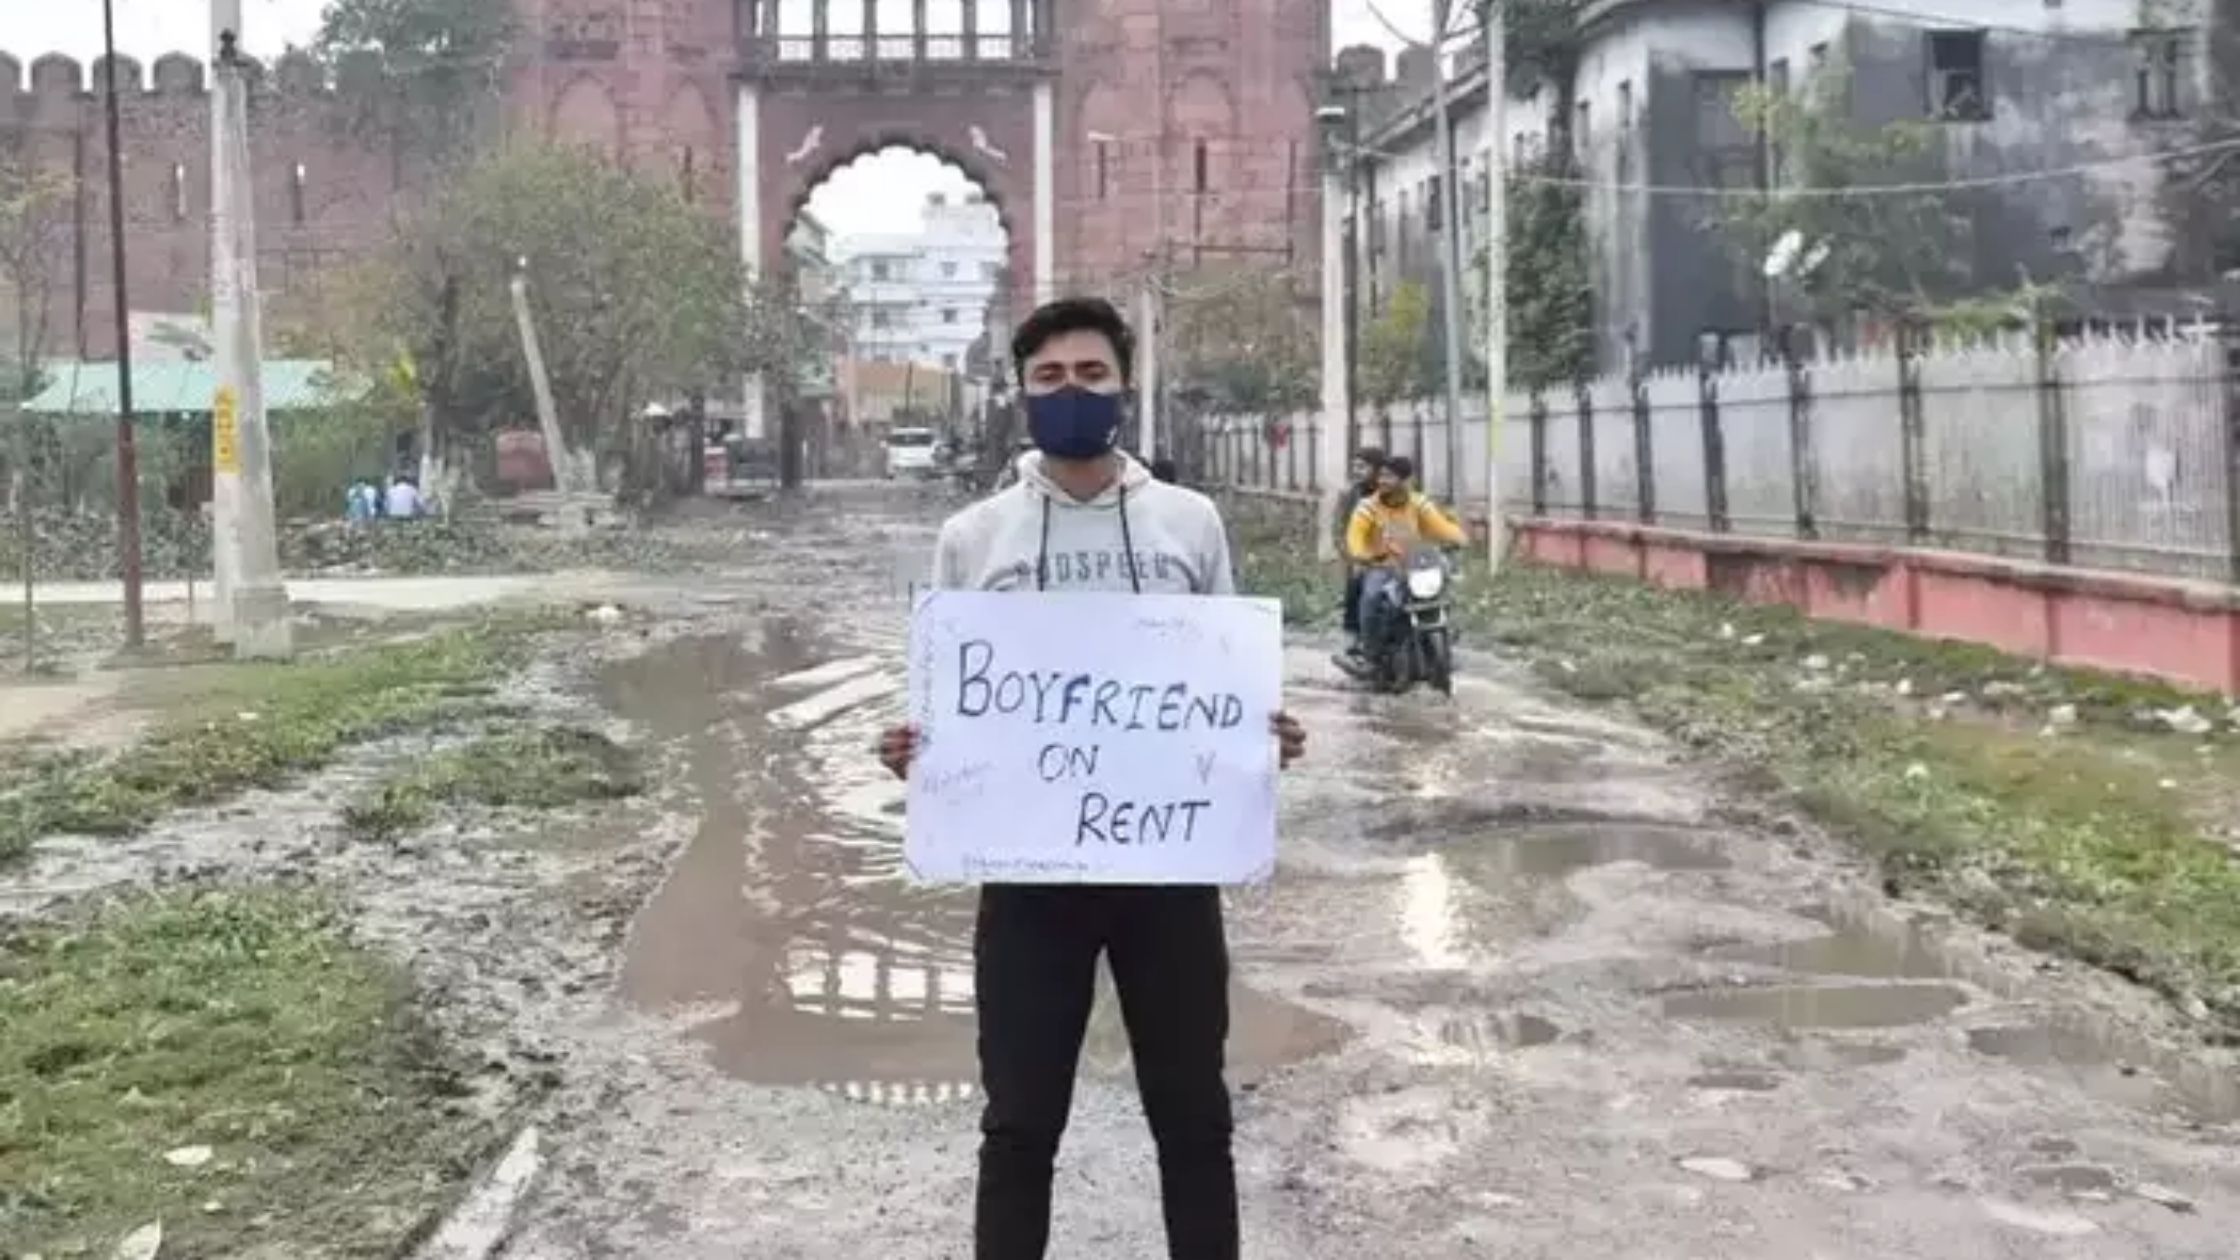 Boyfriend on rent youth going viral on social media in Bihar